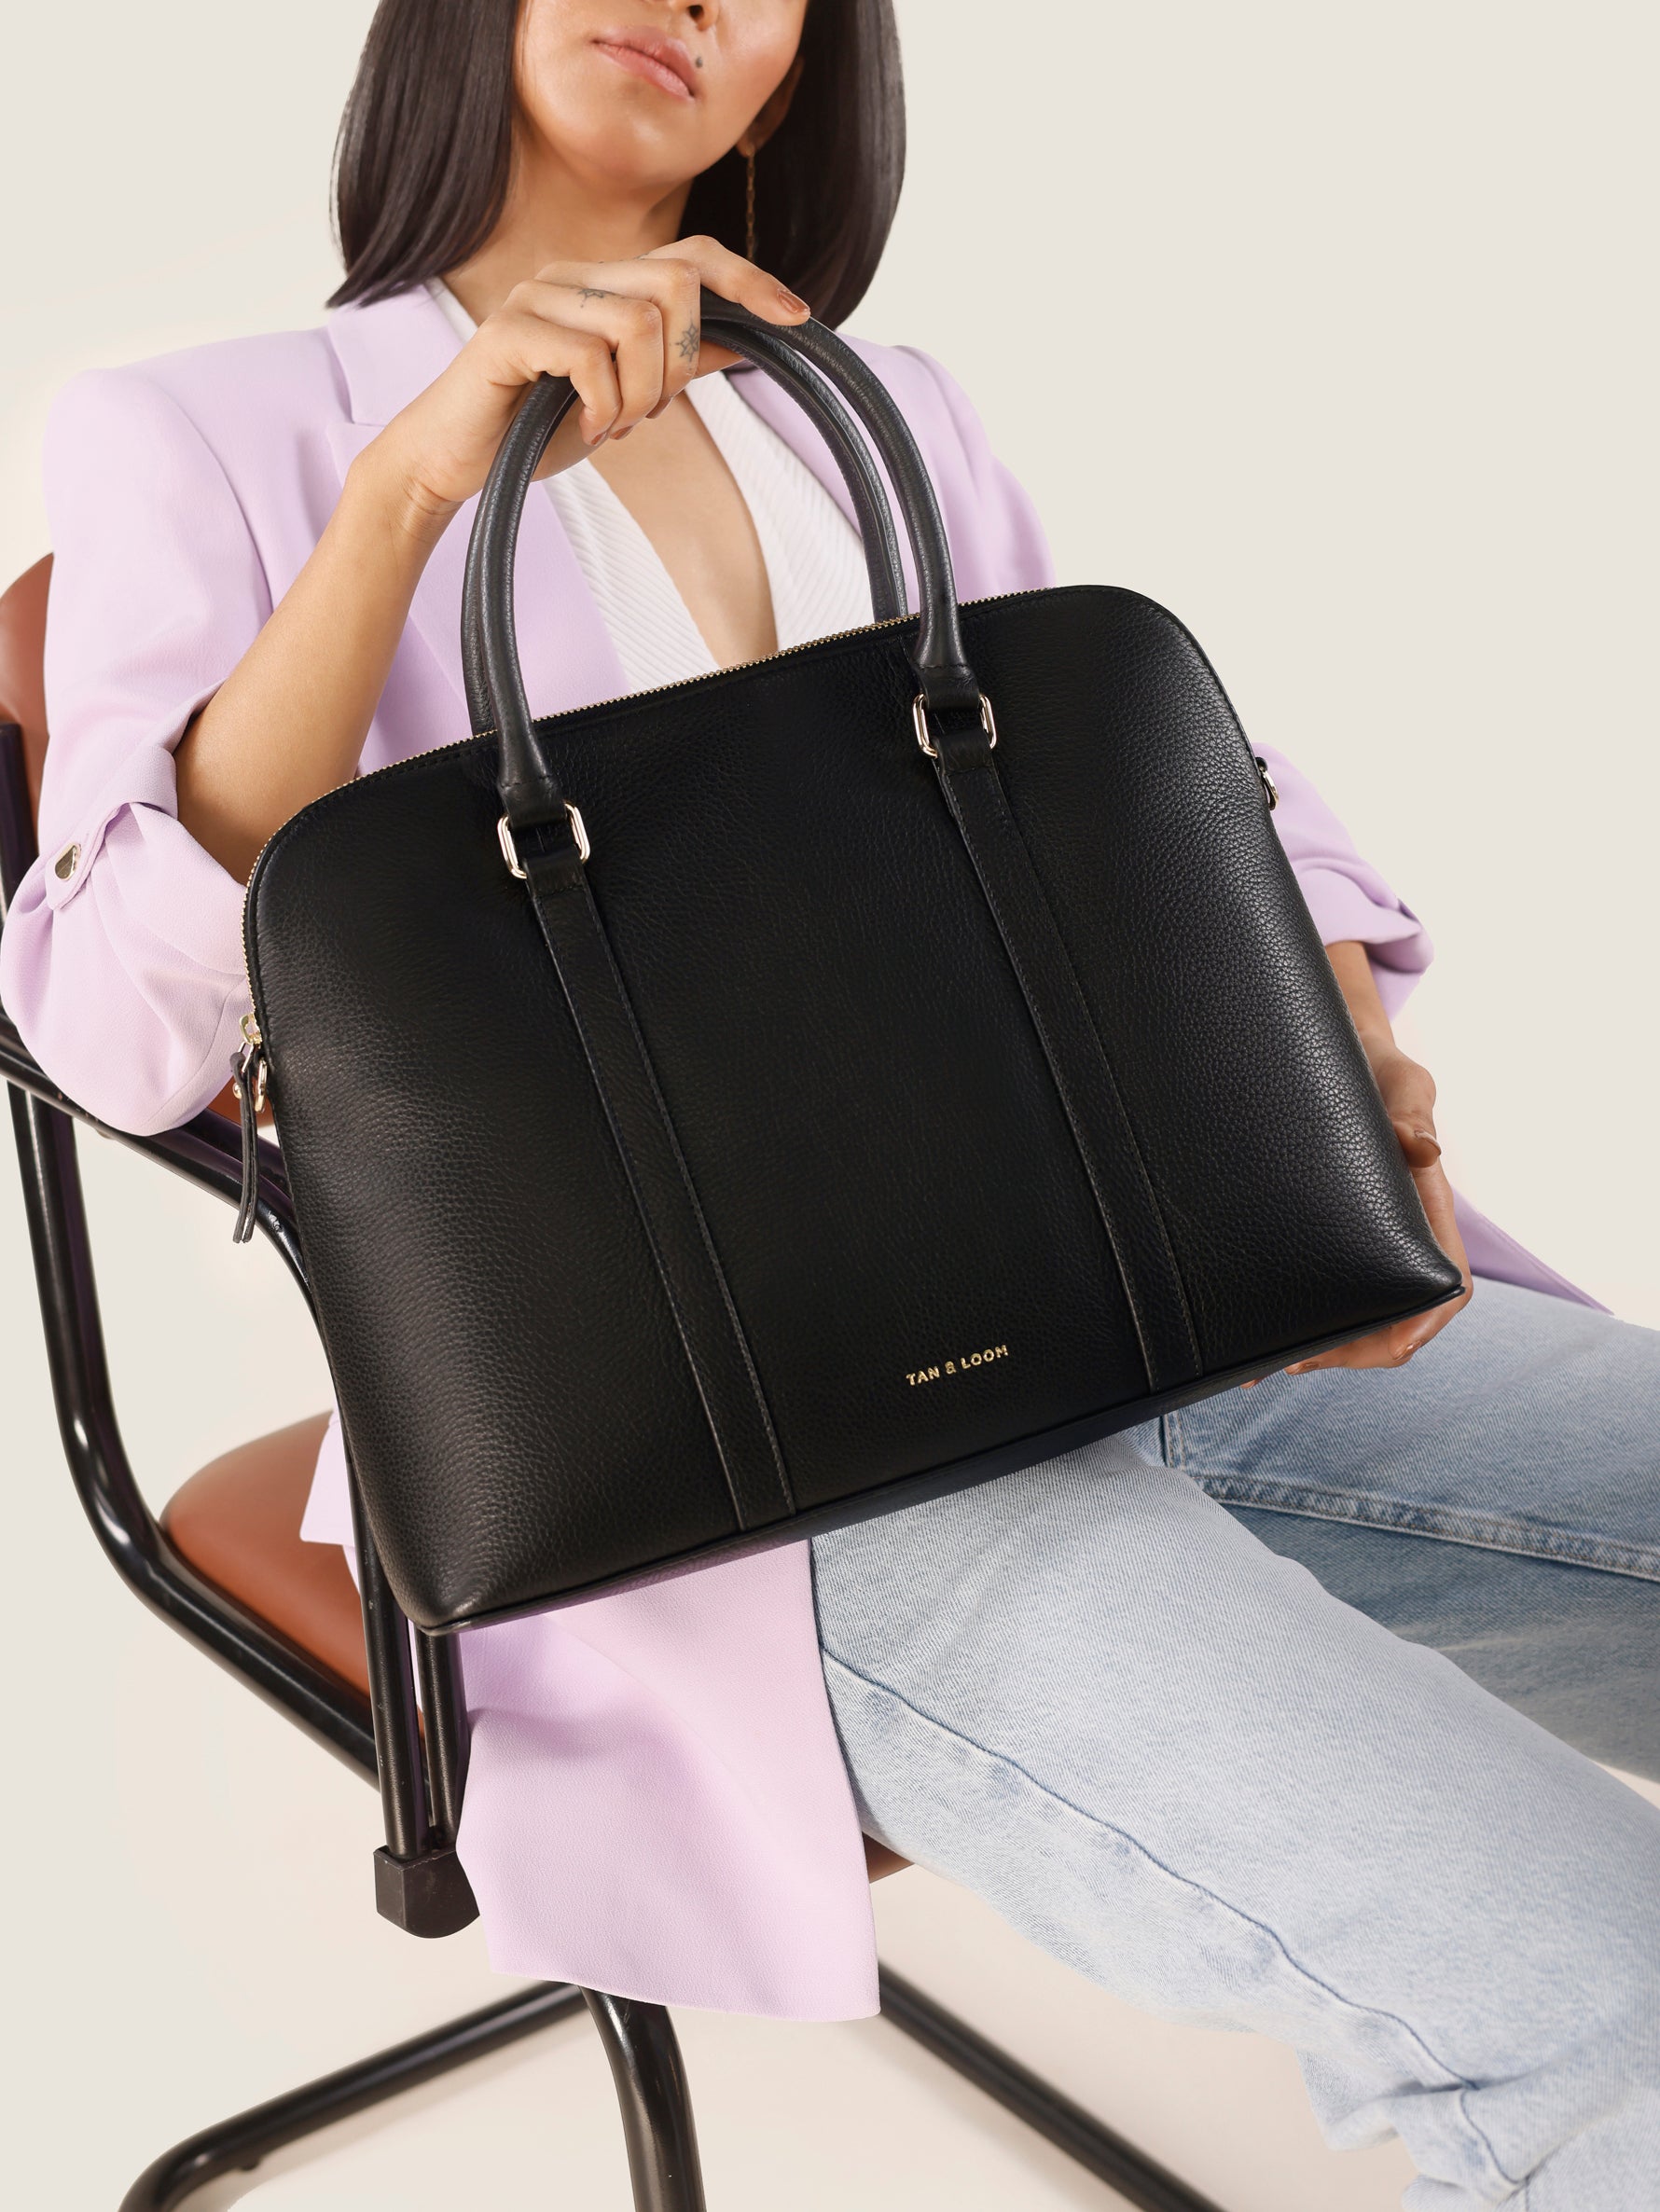 Just Bags Multipurpose Laptop Backpack for Men & Women | Laptop Bag 17 –  Justbags